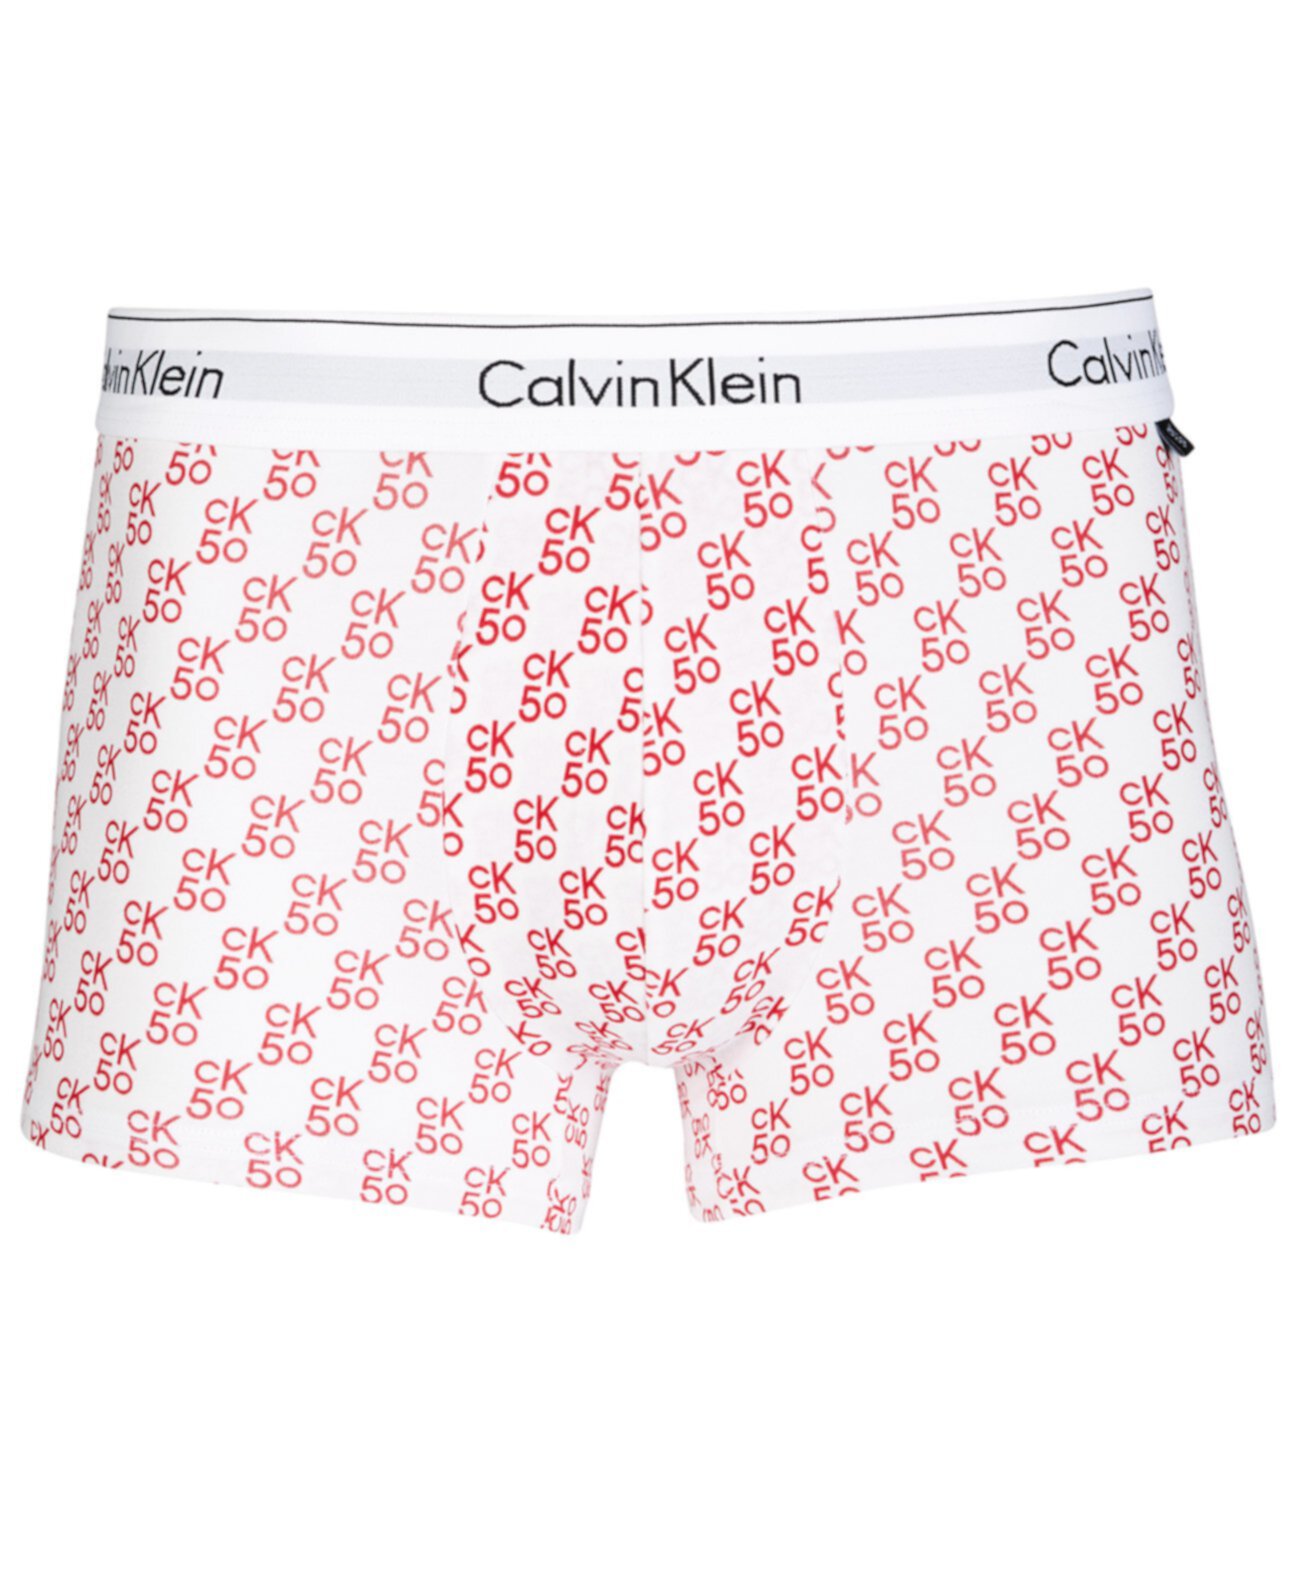 Мужские сундуки с логотипом Calvin Klein